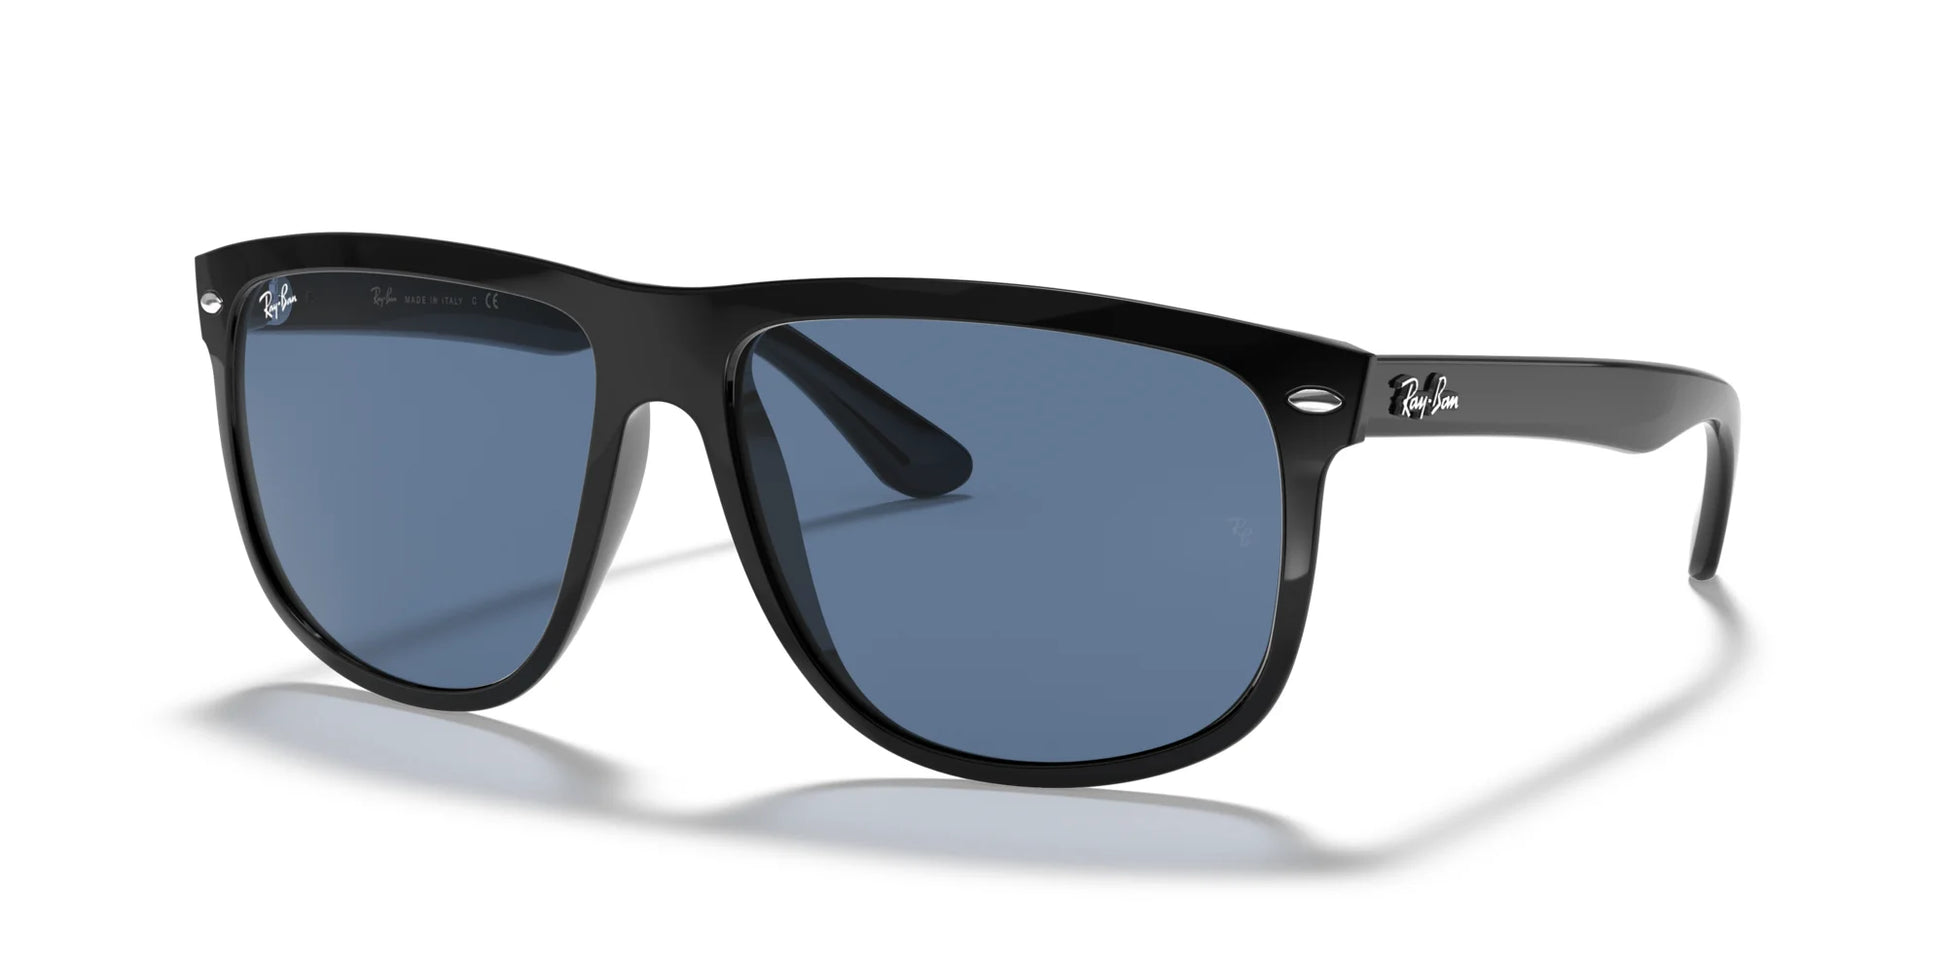 Ray-Ban BOYFRIEND RB4147 Sunglasses Black / Dark Blue